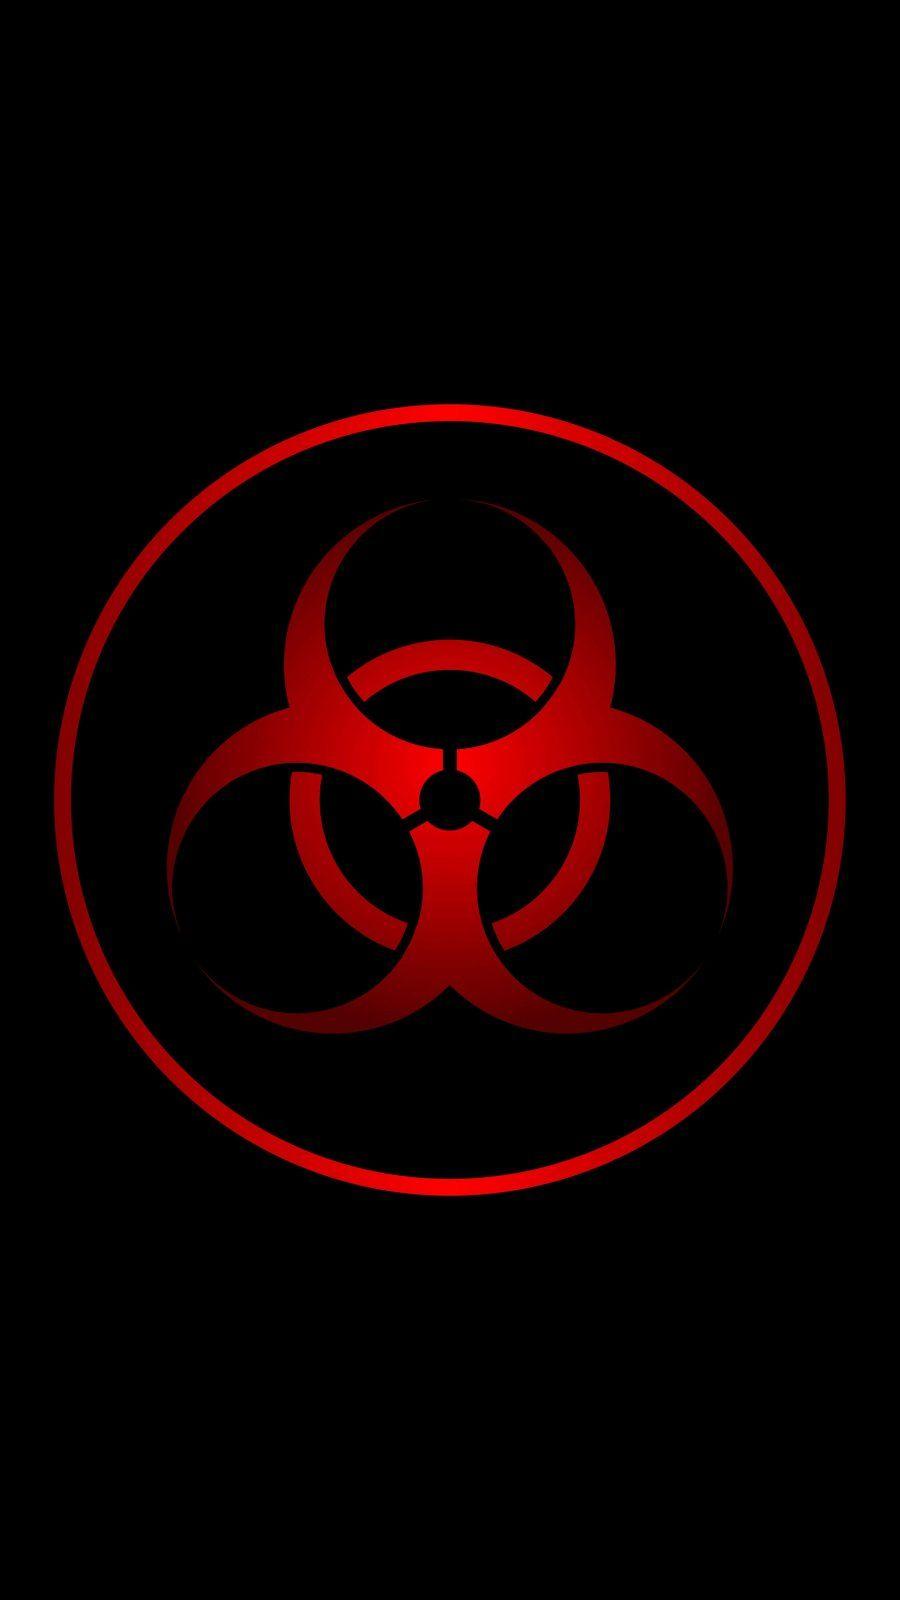 Red Biohazard iPhone Wallpaper. Android wallpaper black